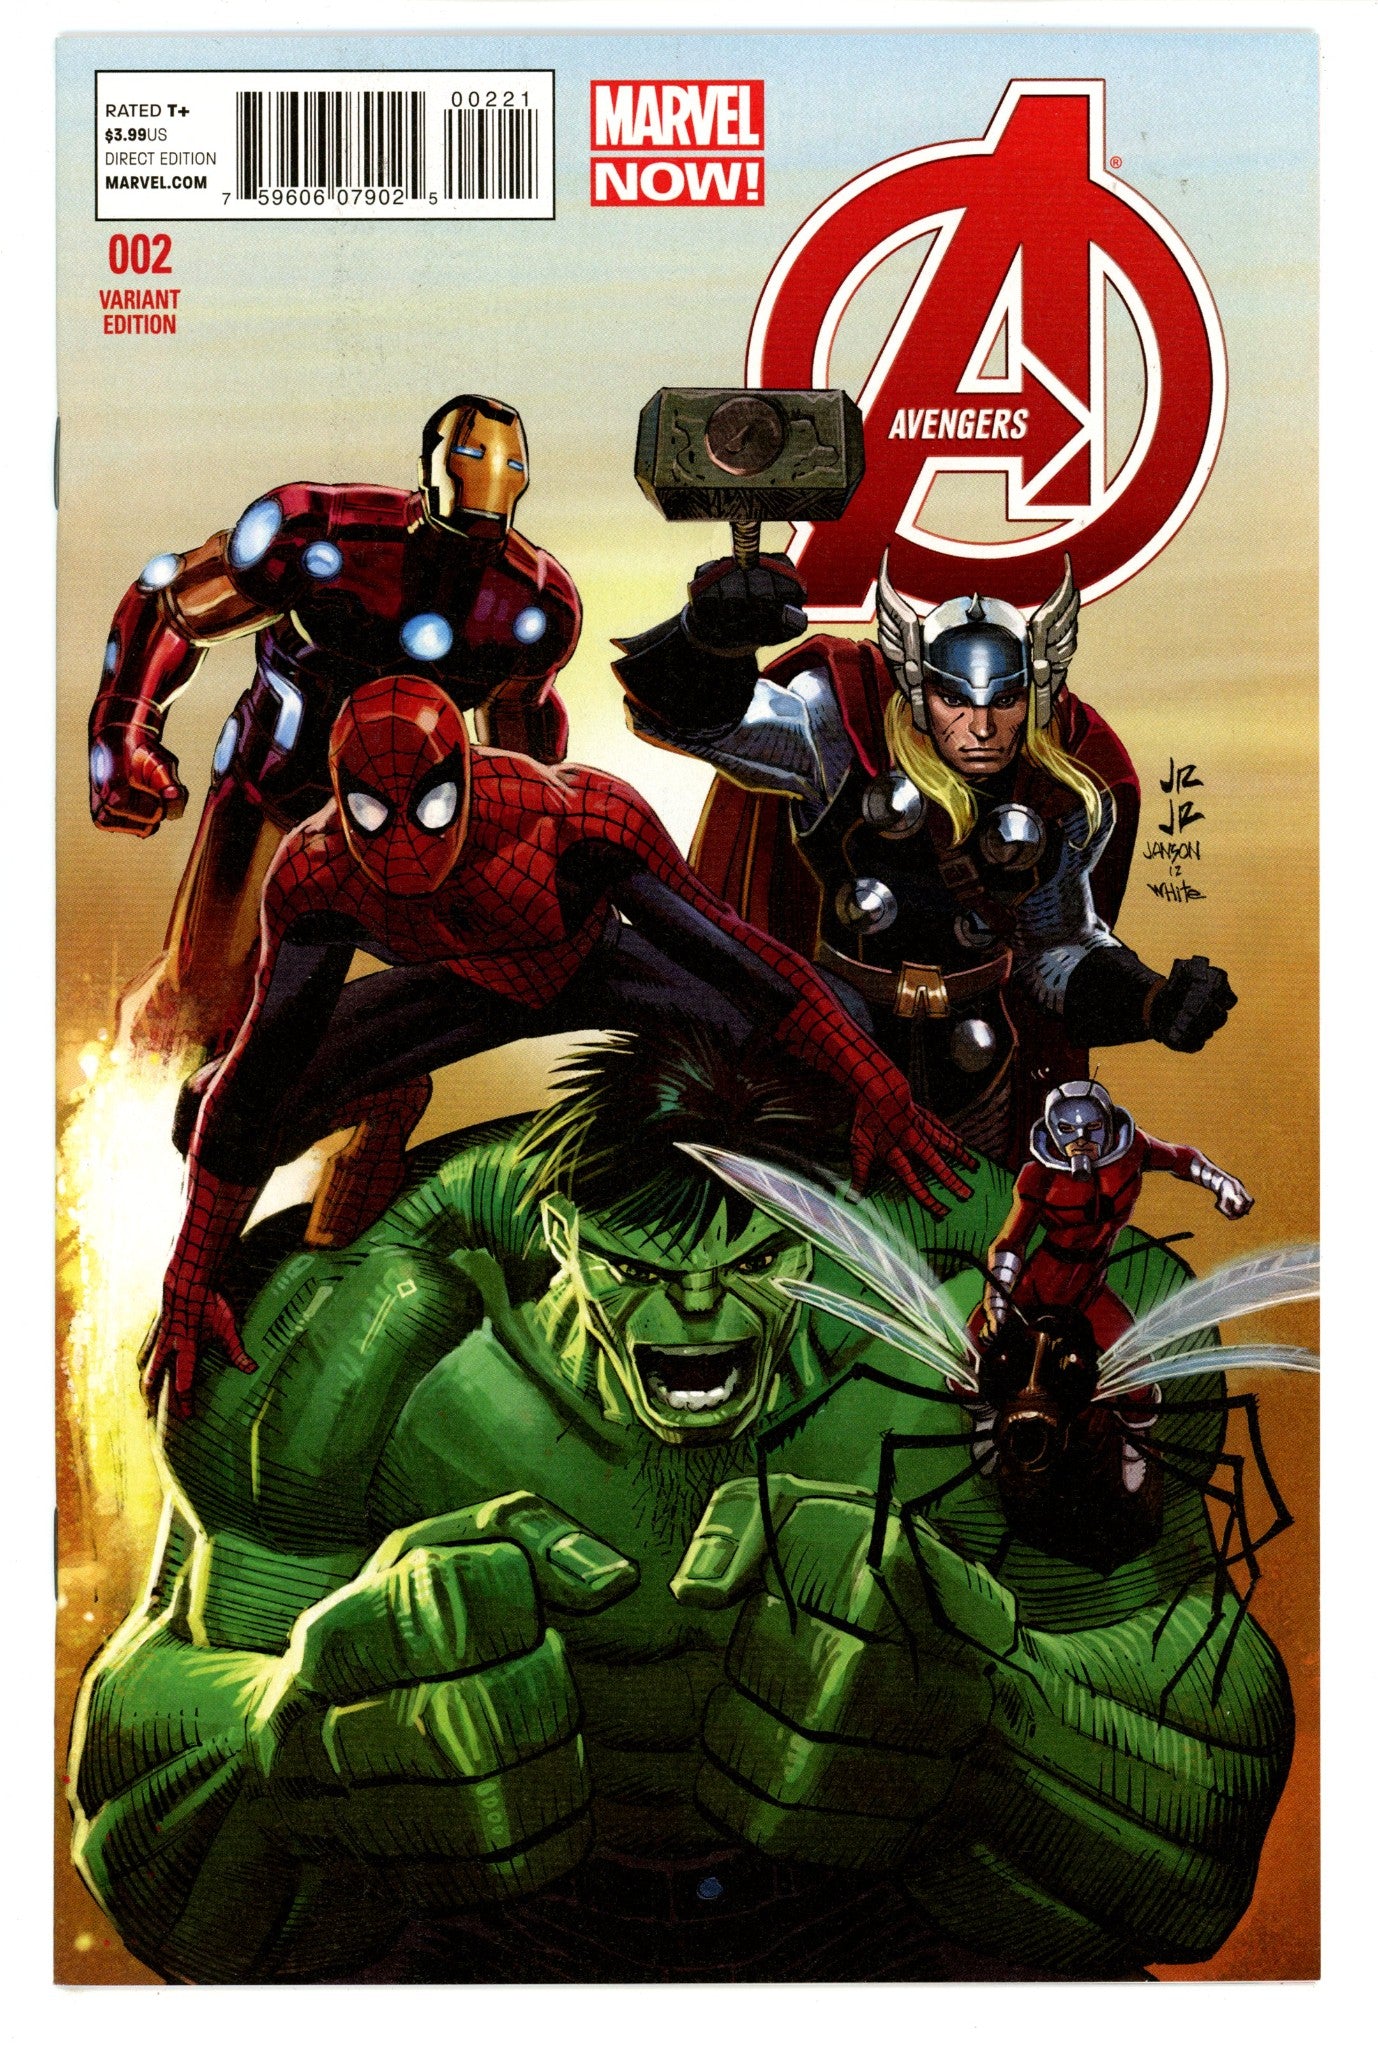 Avengers Vol 5 2 NM- (9.2) (2013) Jr. Incentive Variant 